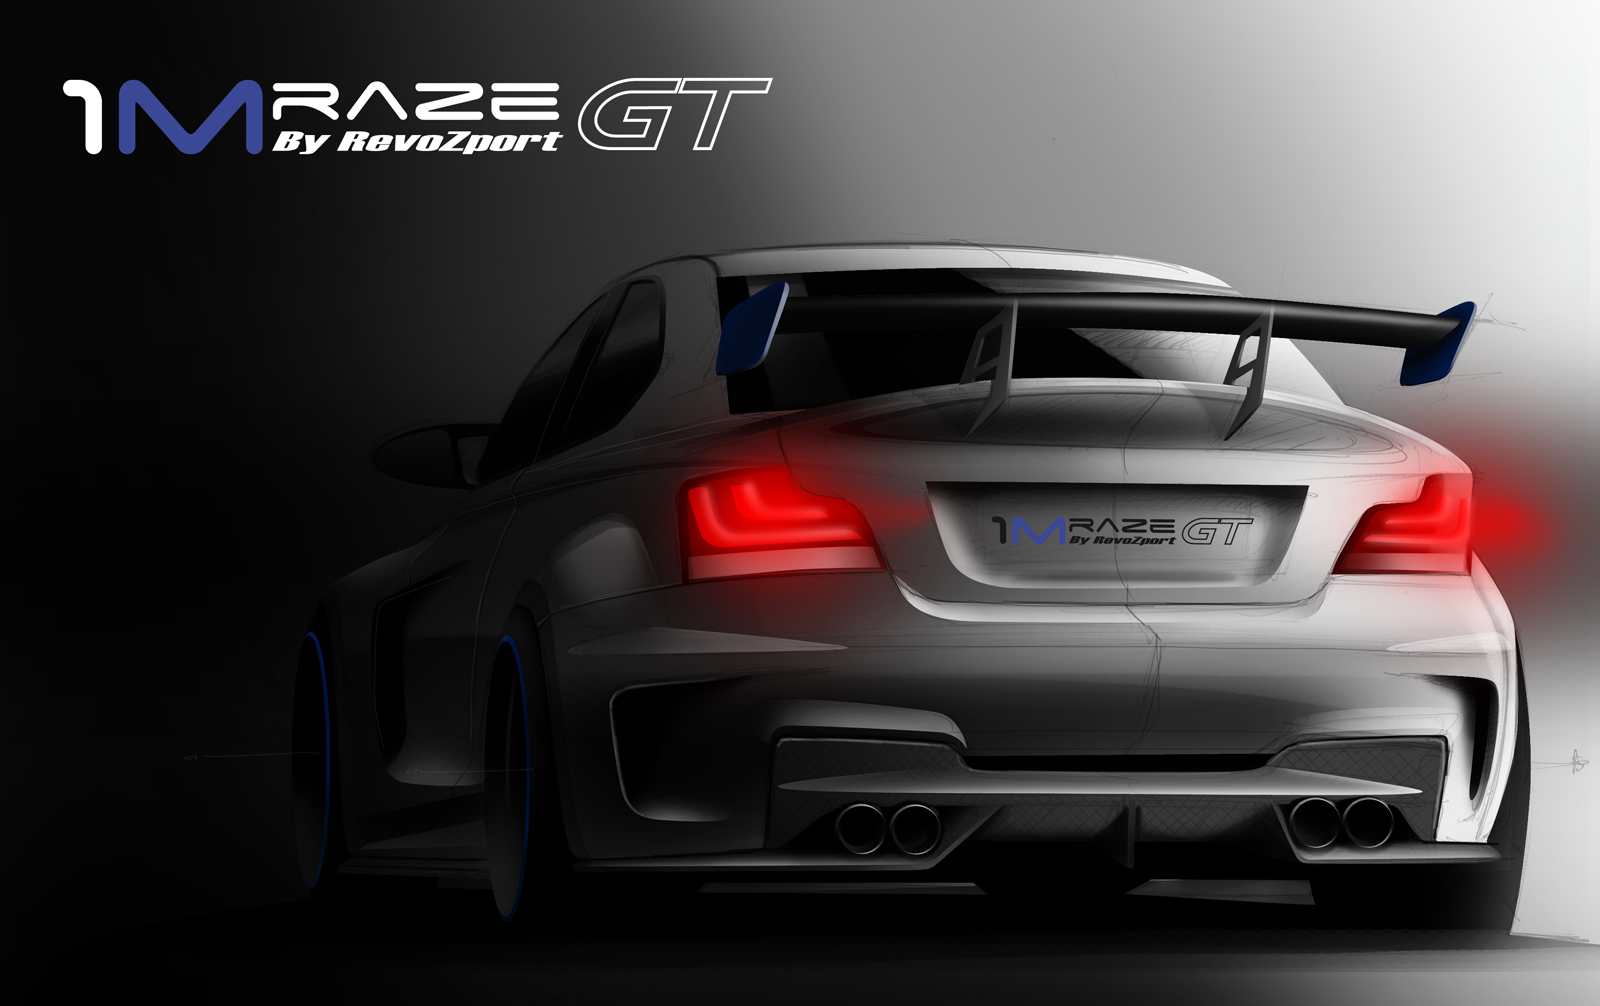 Teaser of BMW 1M Raze GT wide body kit